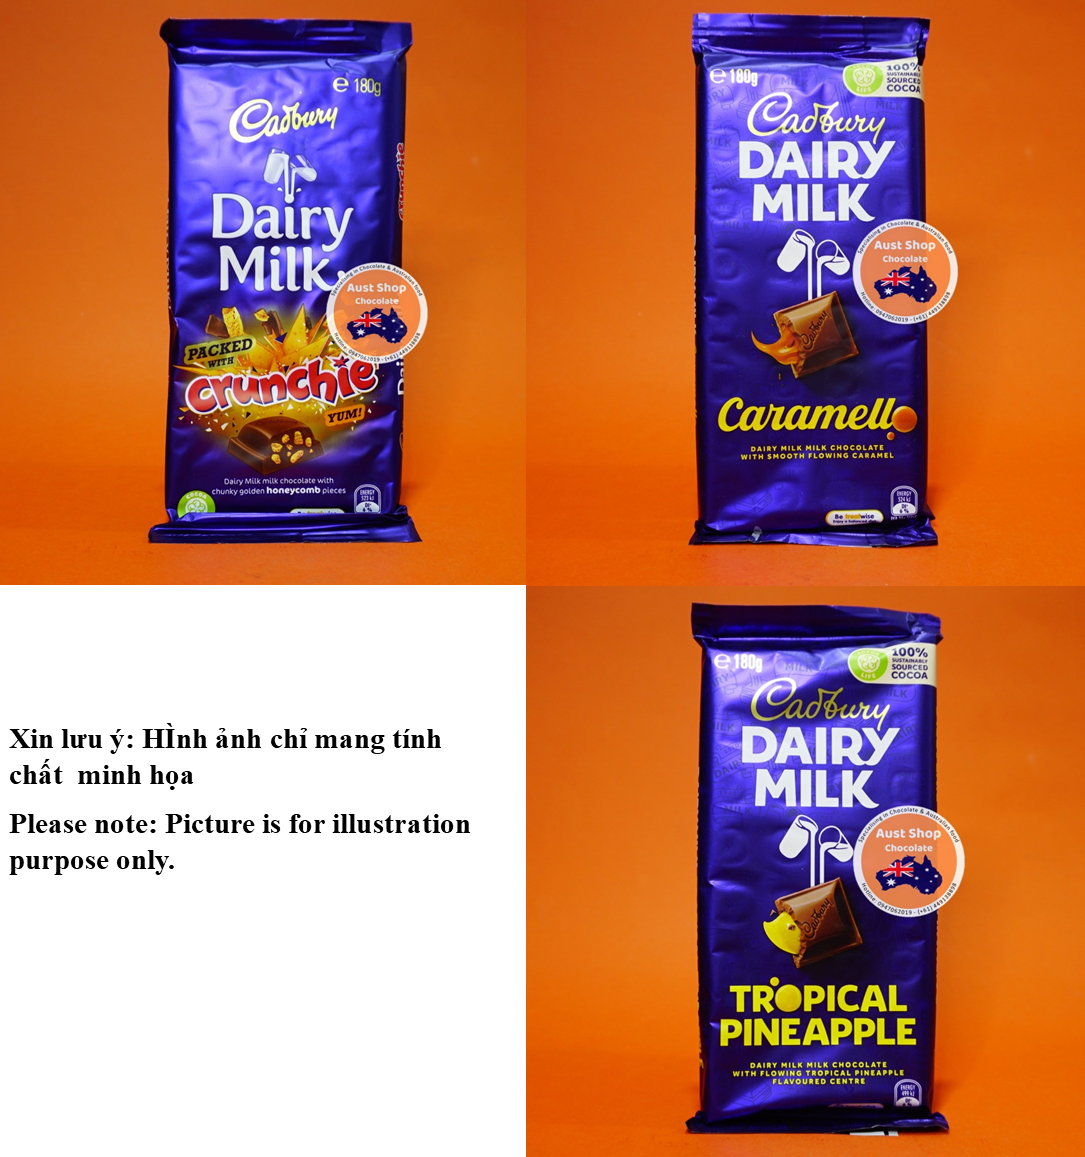 [HCM]Socola thanh Cadbury Dairy Milk Crunchie / Caramello / Tropical Pineapple 180g - Australian Stock - Aust Shop Chocolate